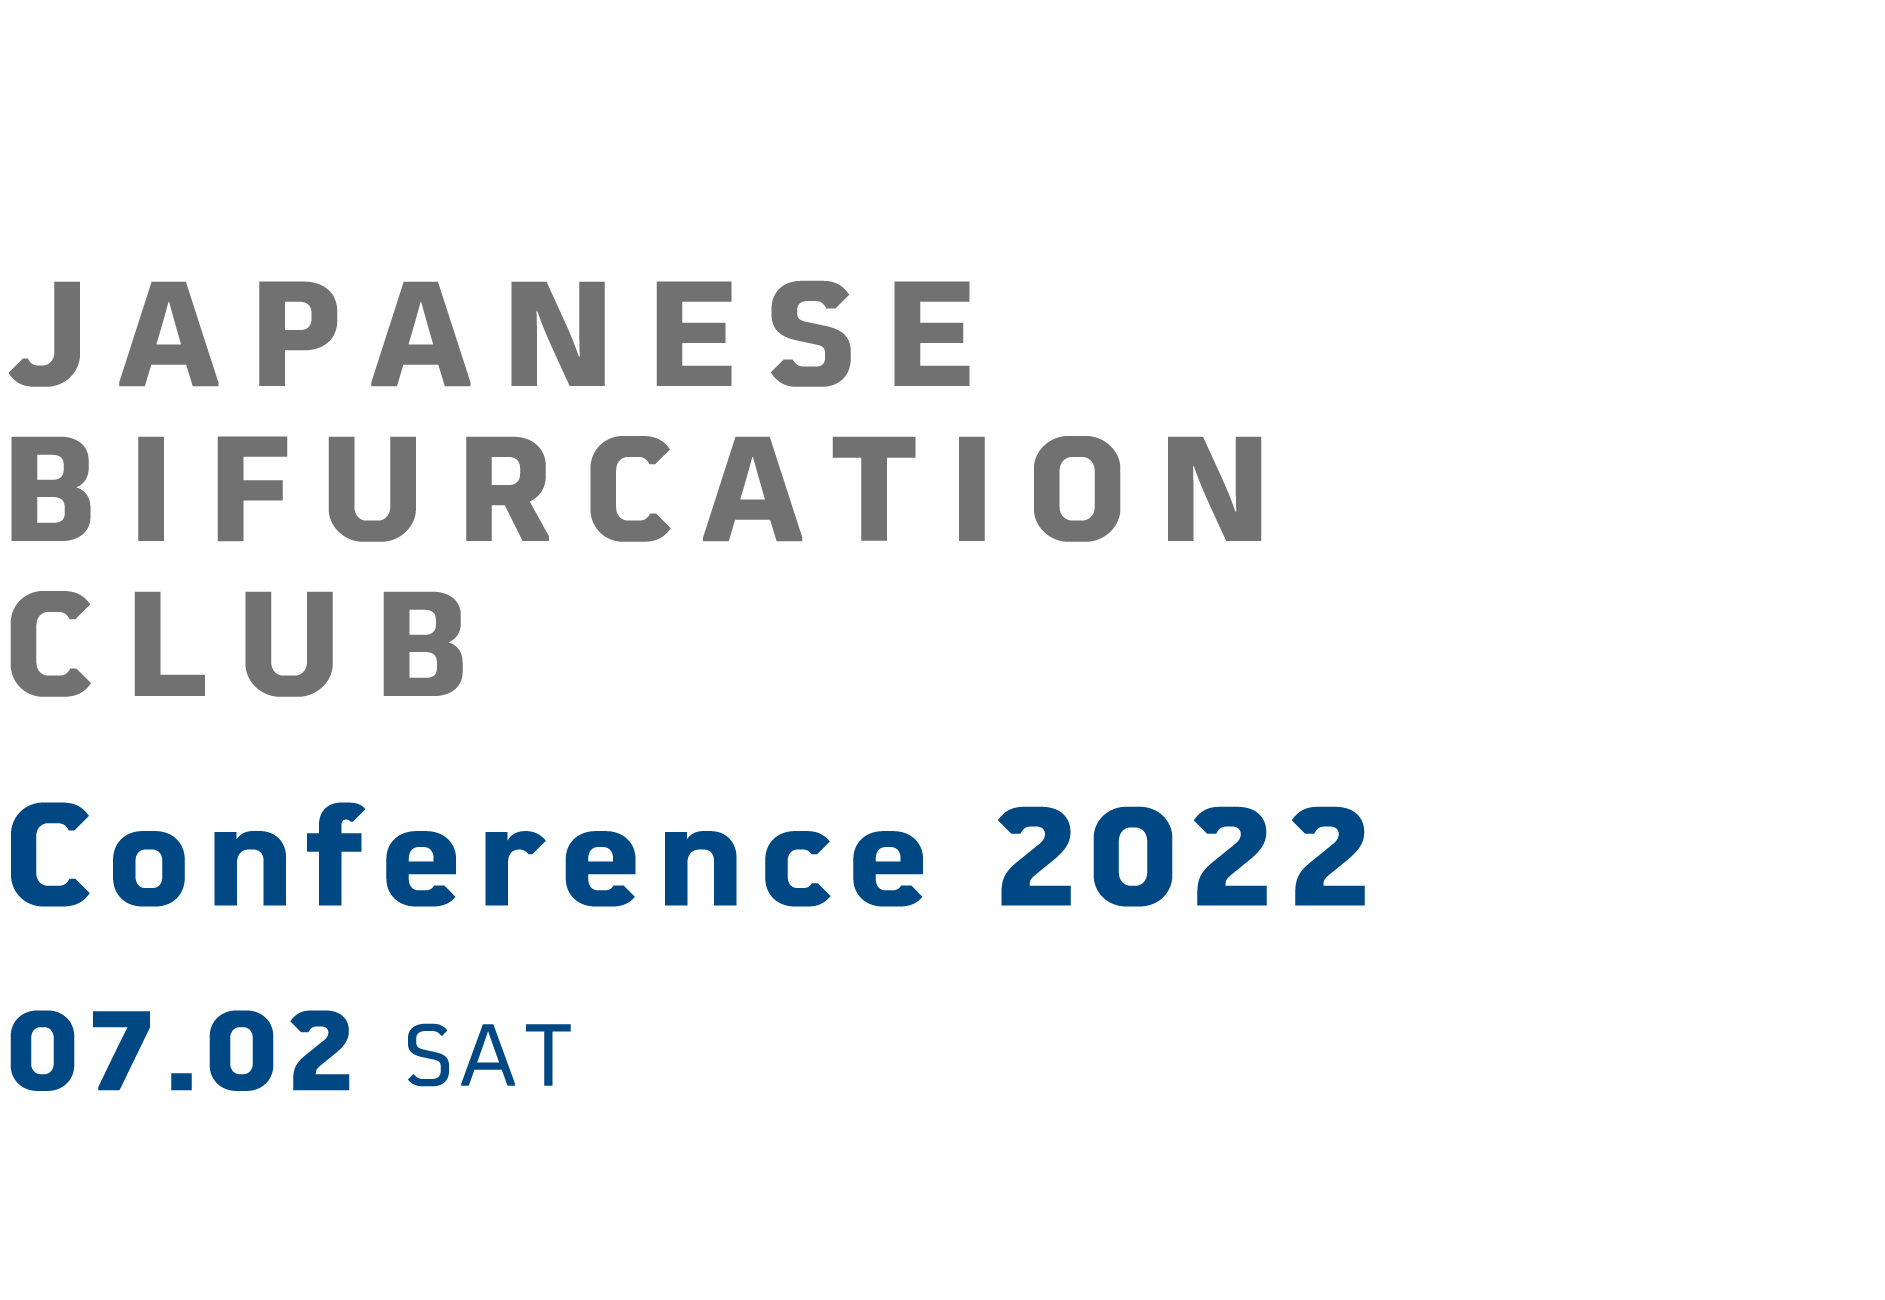 Japanese Bifurcation Club Conference 2022